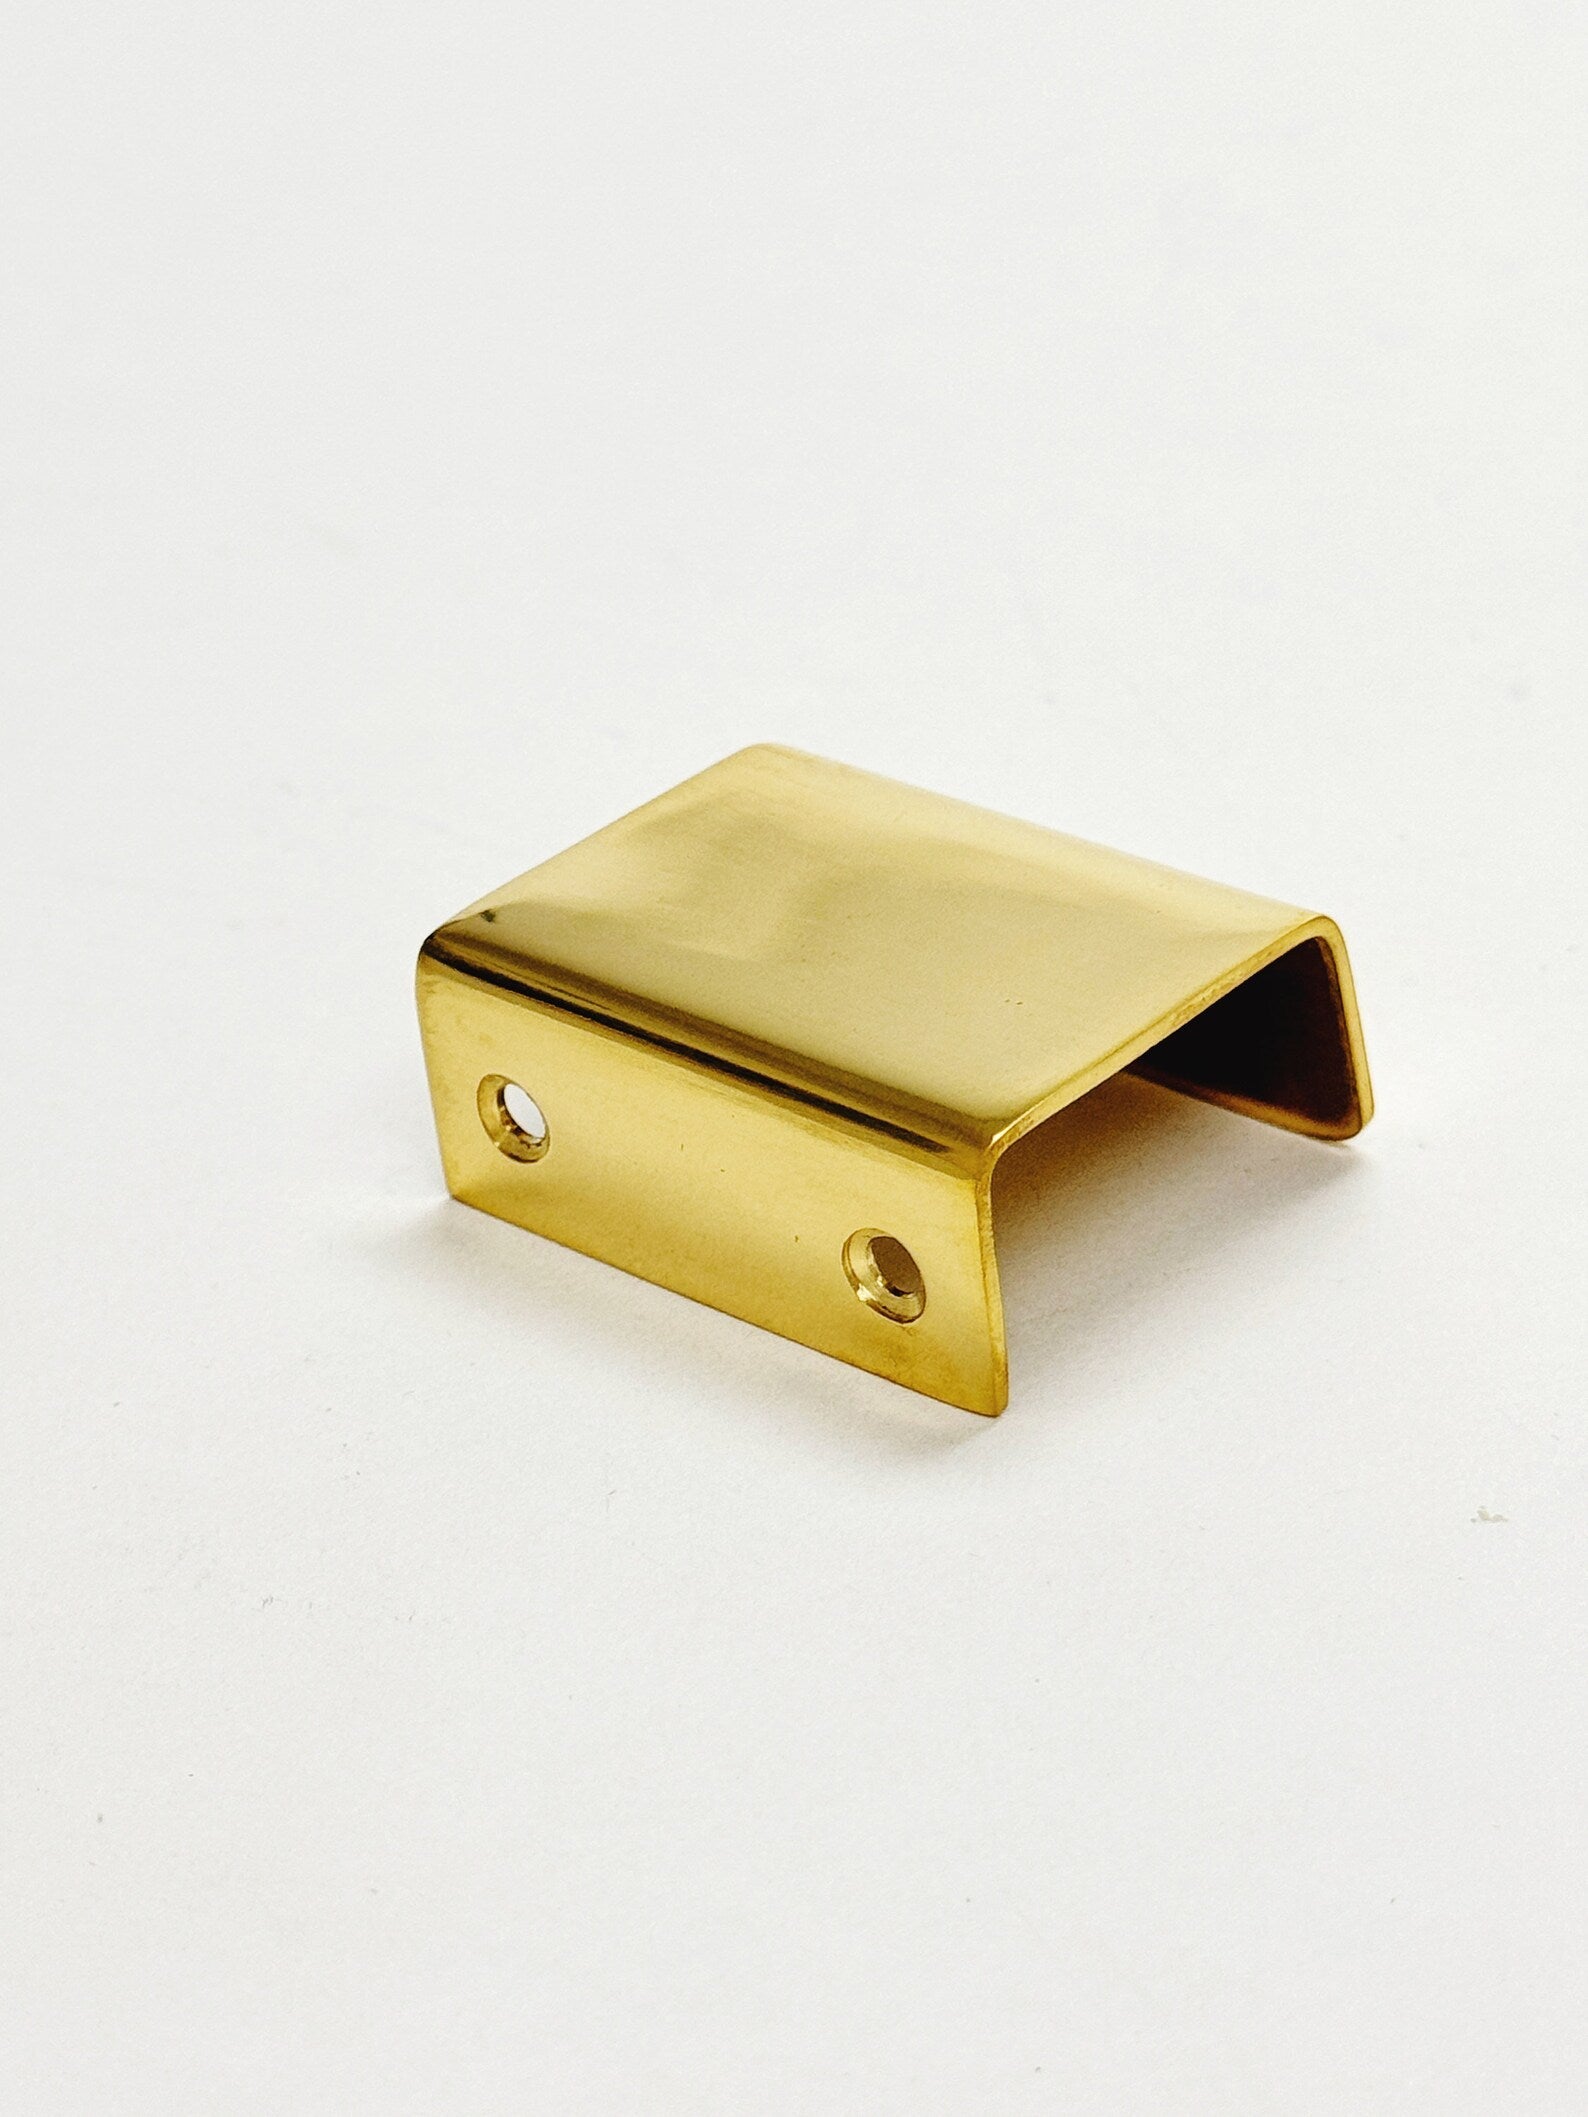 Unlacquered Brass "Patina" Edge Drawer Pulls - Forge Hardware Studio